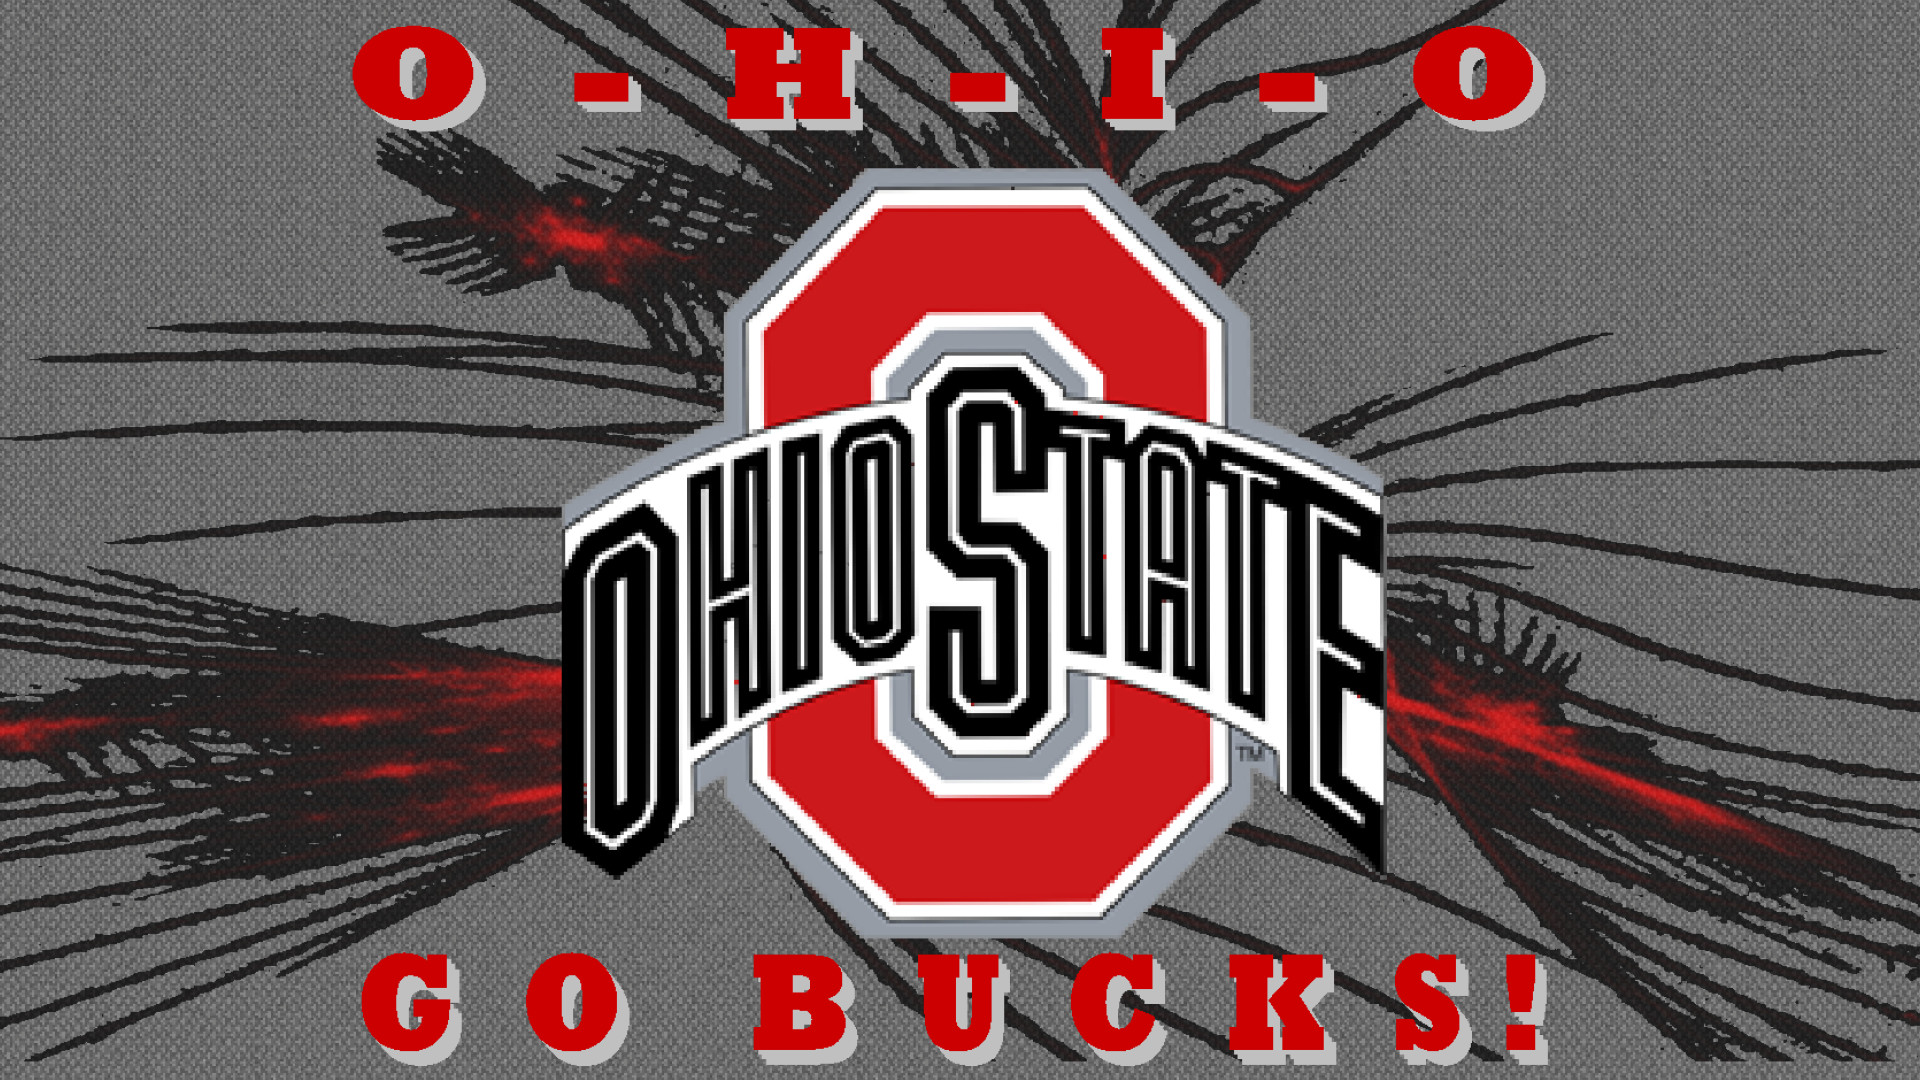 1920x1080 Ohio State University Basketball images O-H-I-O GO BUCKS! HD wallpaper and  background photos